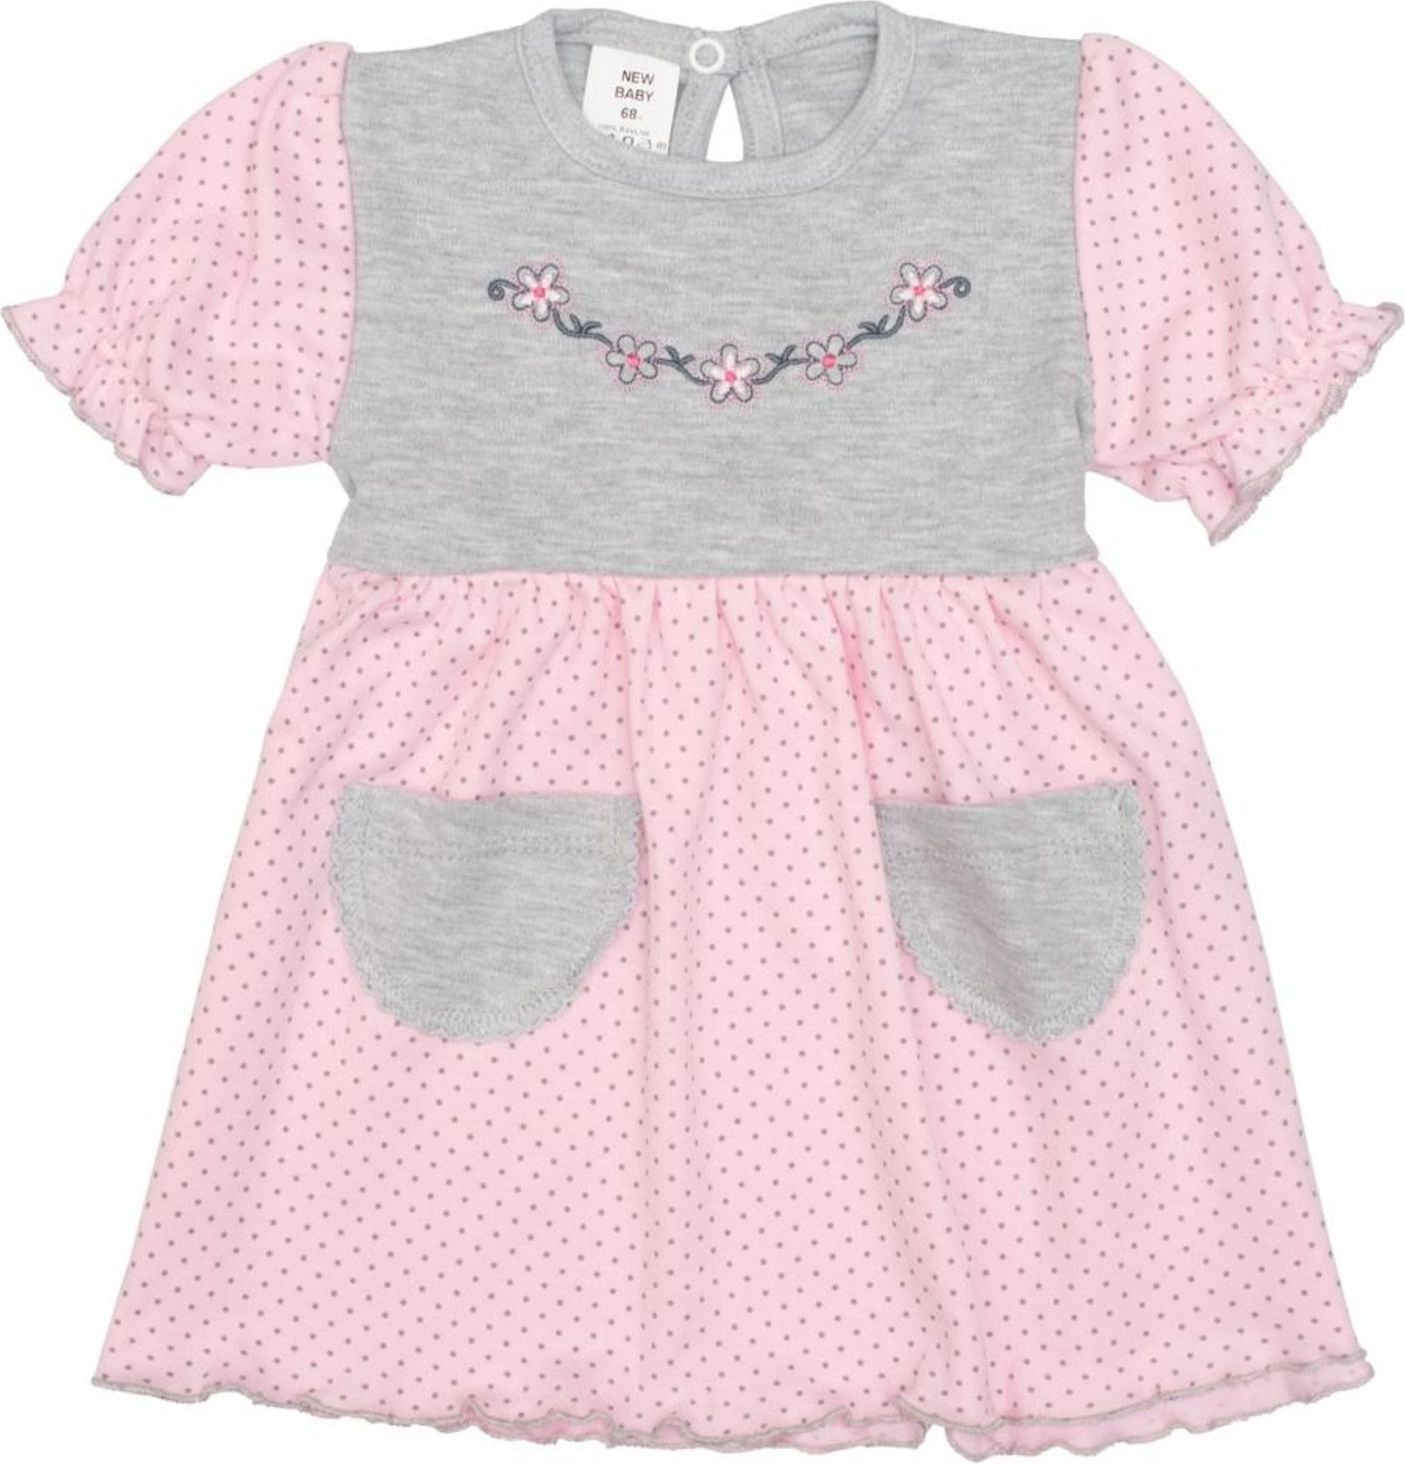 Kojenecké šatičky s krátkým rukávem New Baby Summer dress růžovo-šedé - Kojenecké šatičky s krátkým rukávem New Baby Summer dress růžovo-šedé - obrázek 1